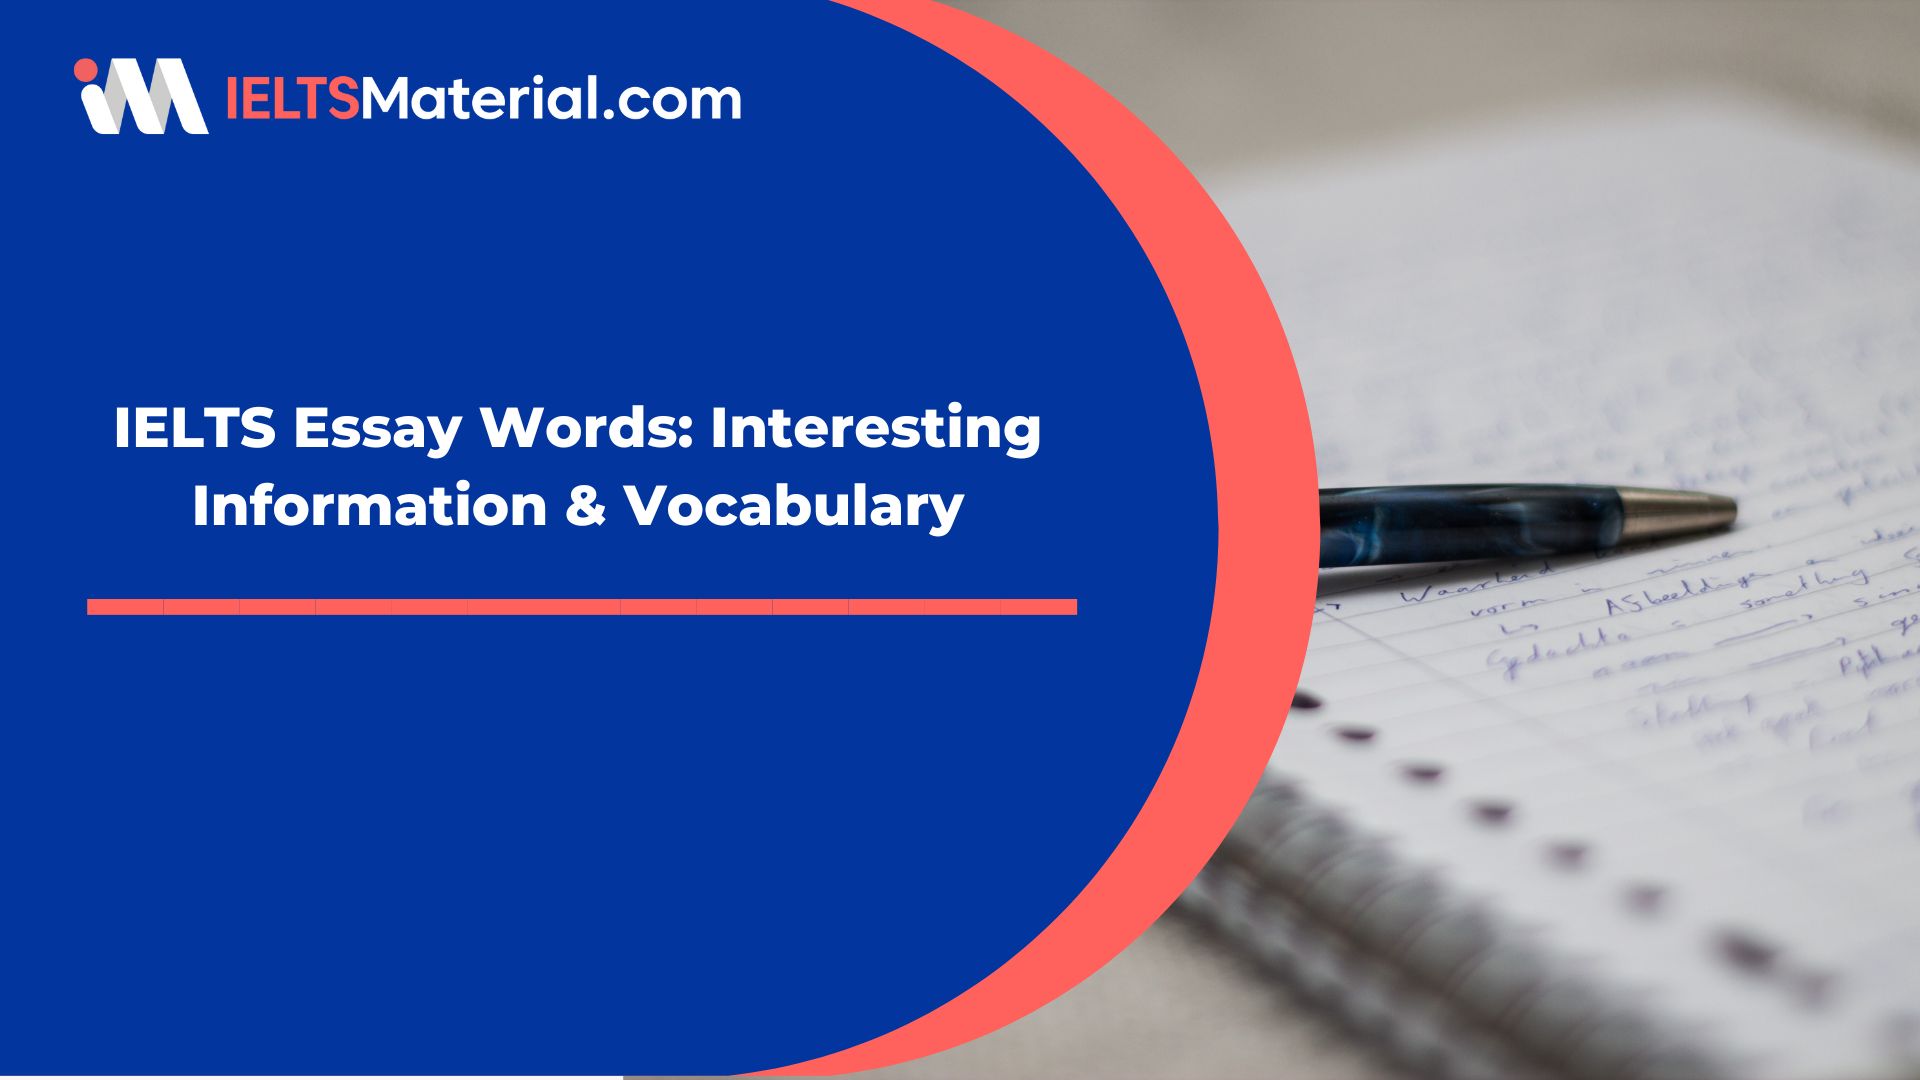 IELTS Essay Words: Interesting Information & Vocabulary